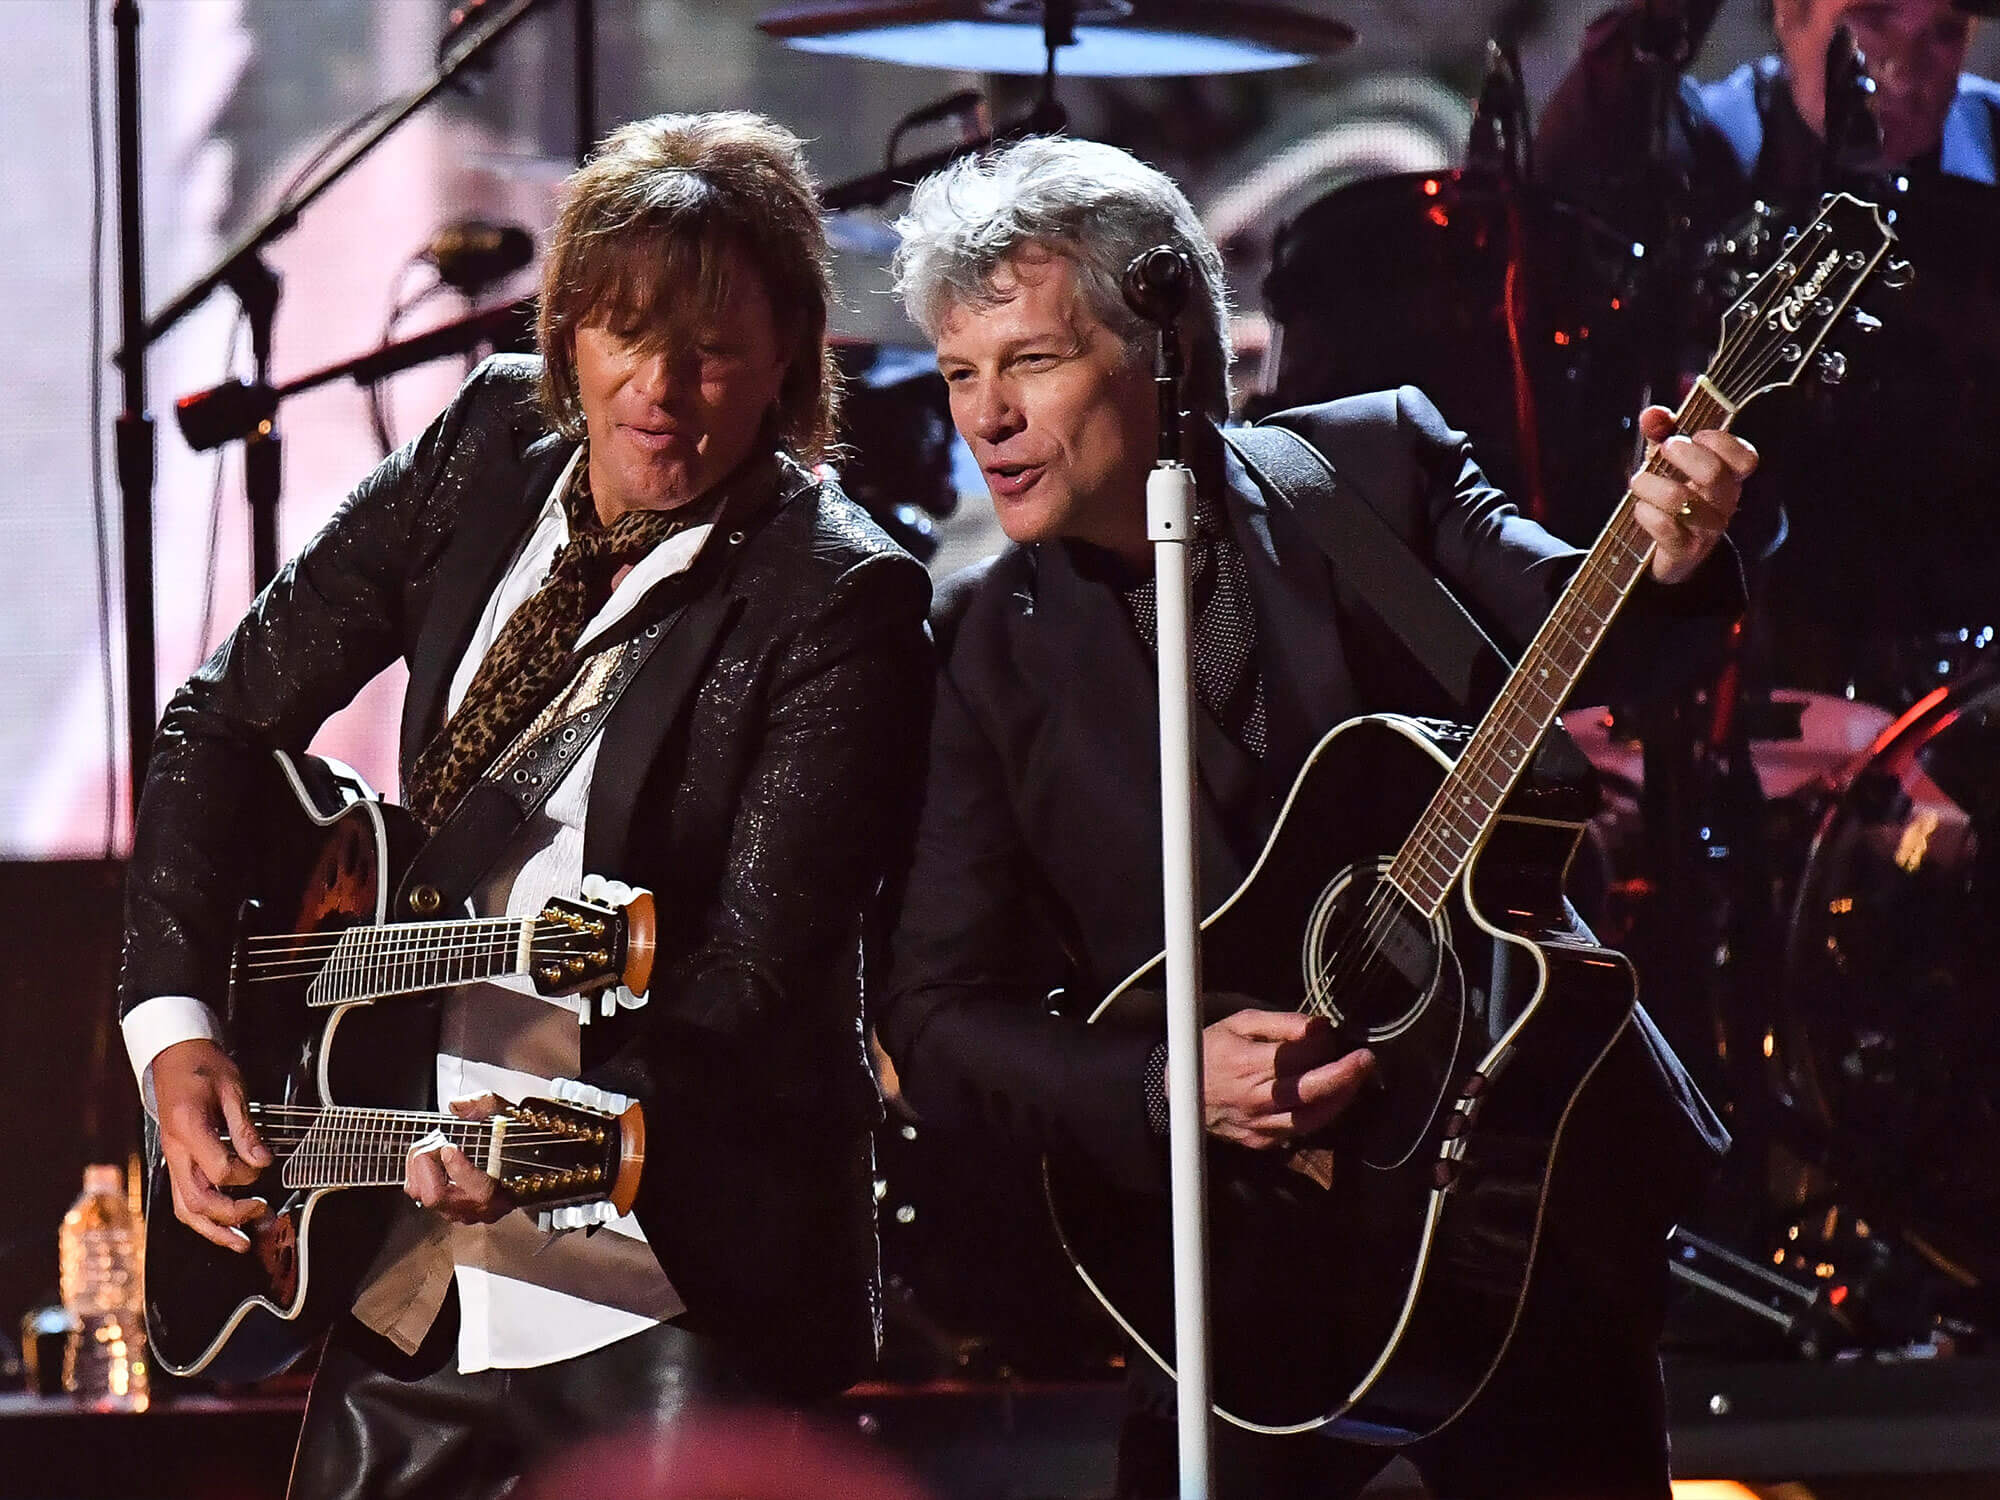 [L-R] Richie Sambora and Jon Bon Jovi